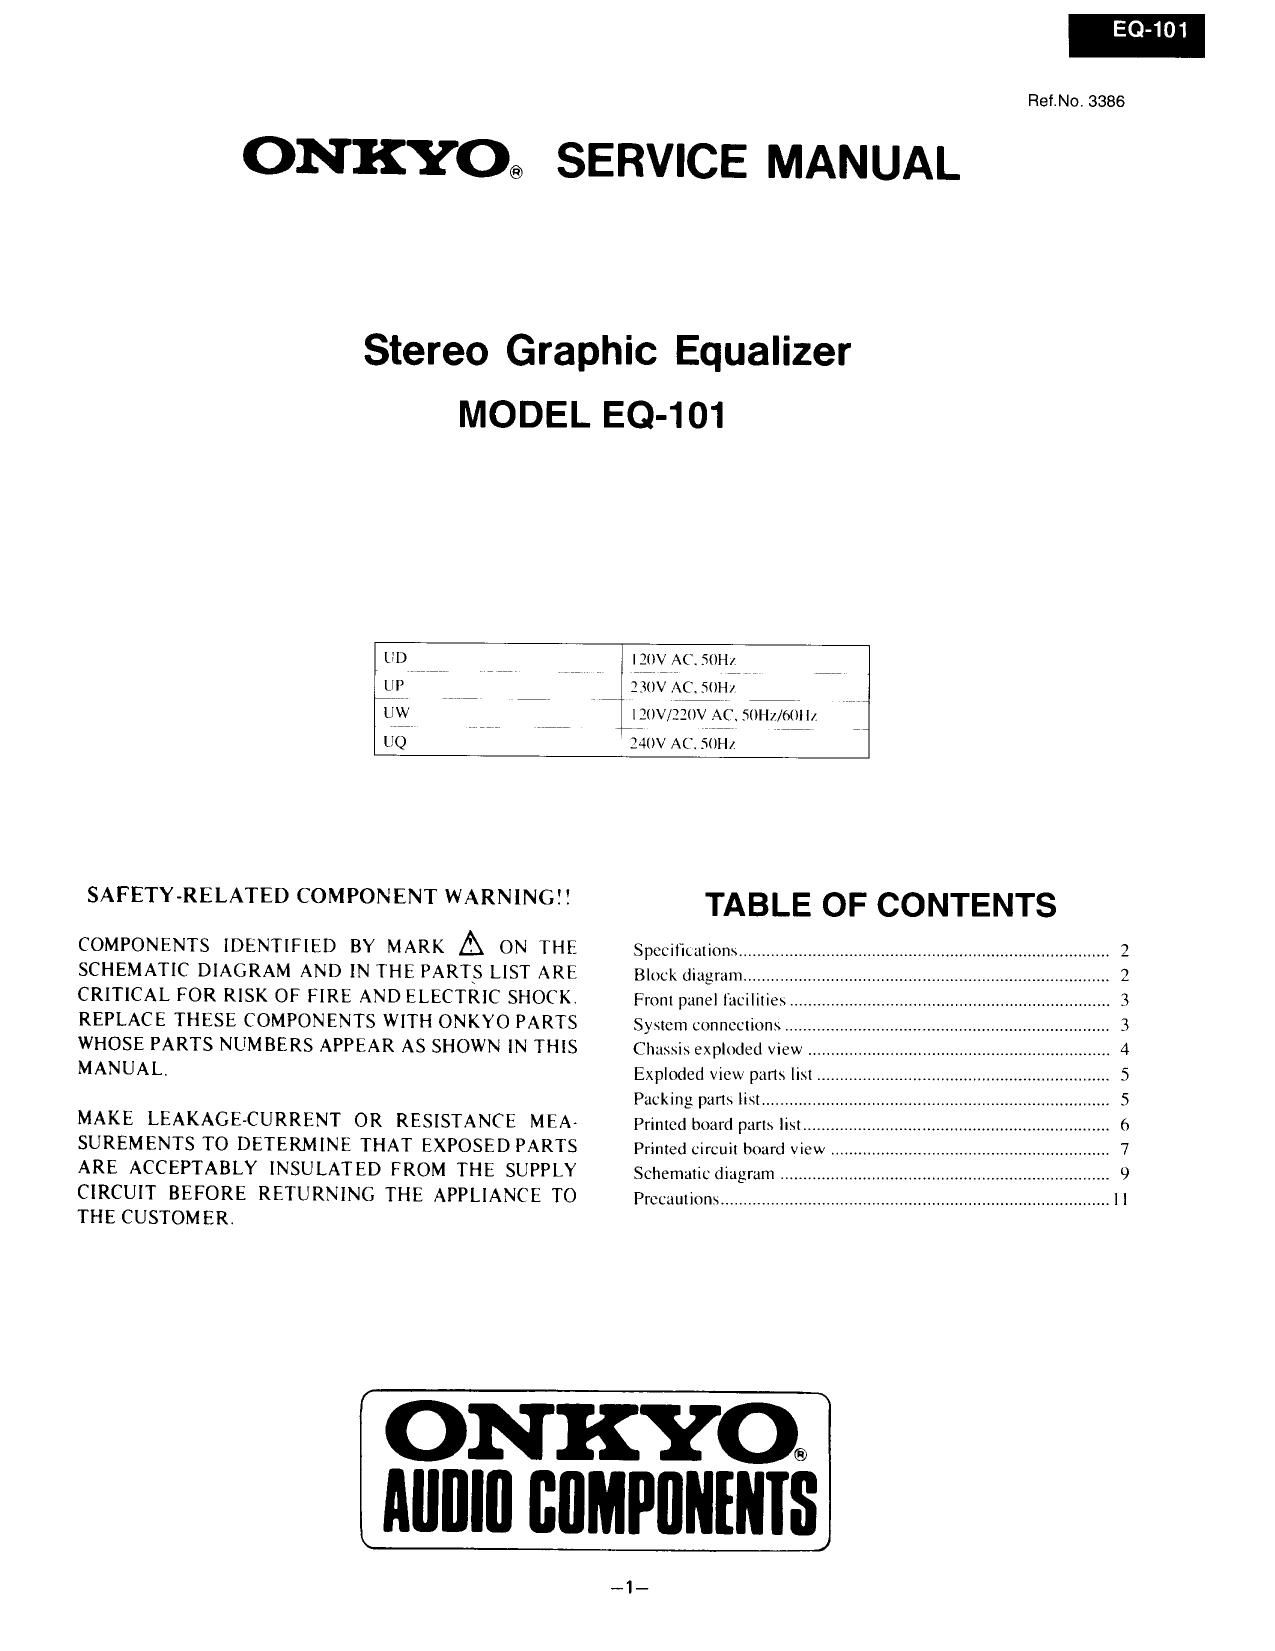 Onkyo EQ 101 Service Manual